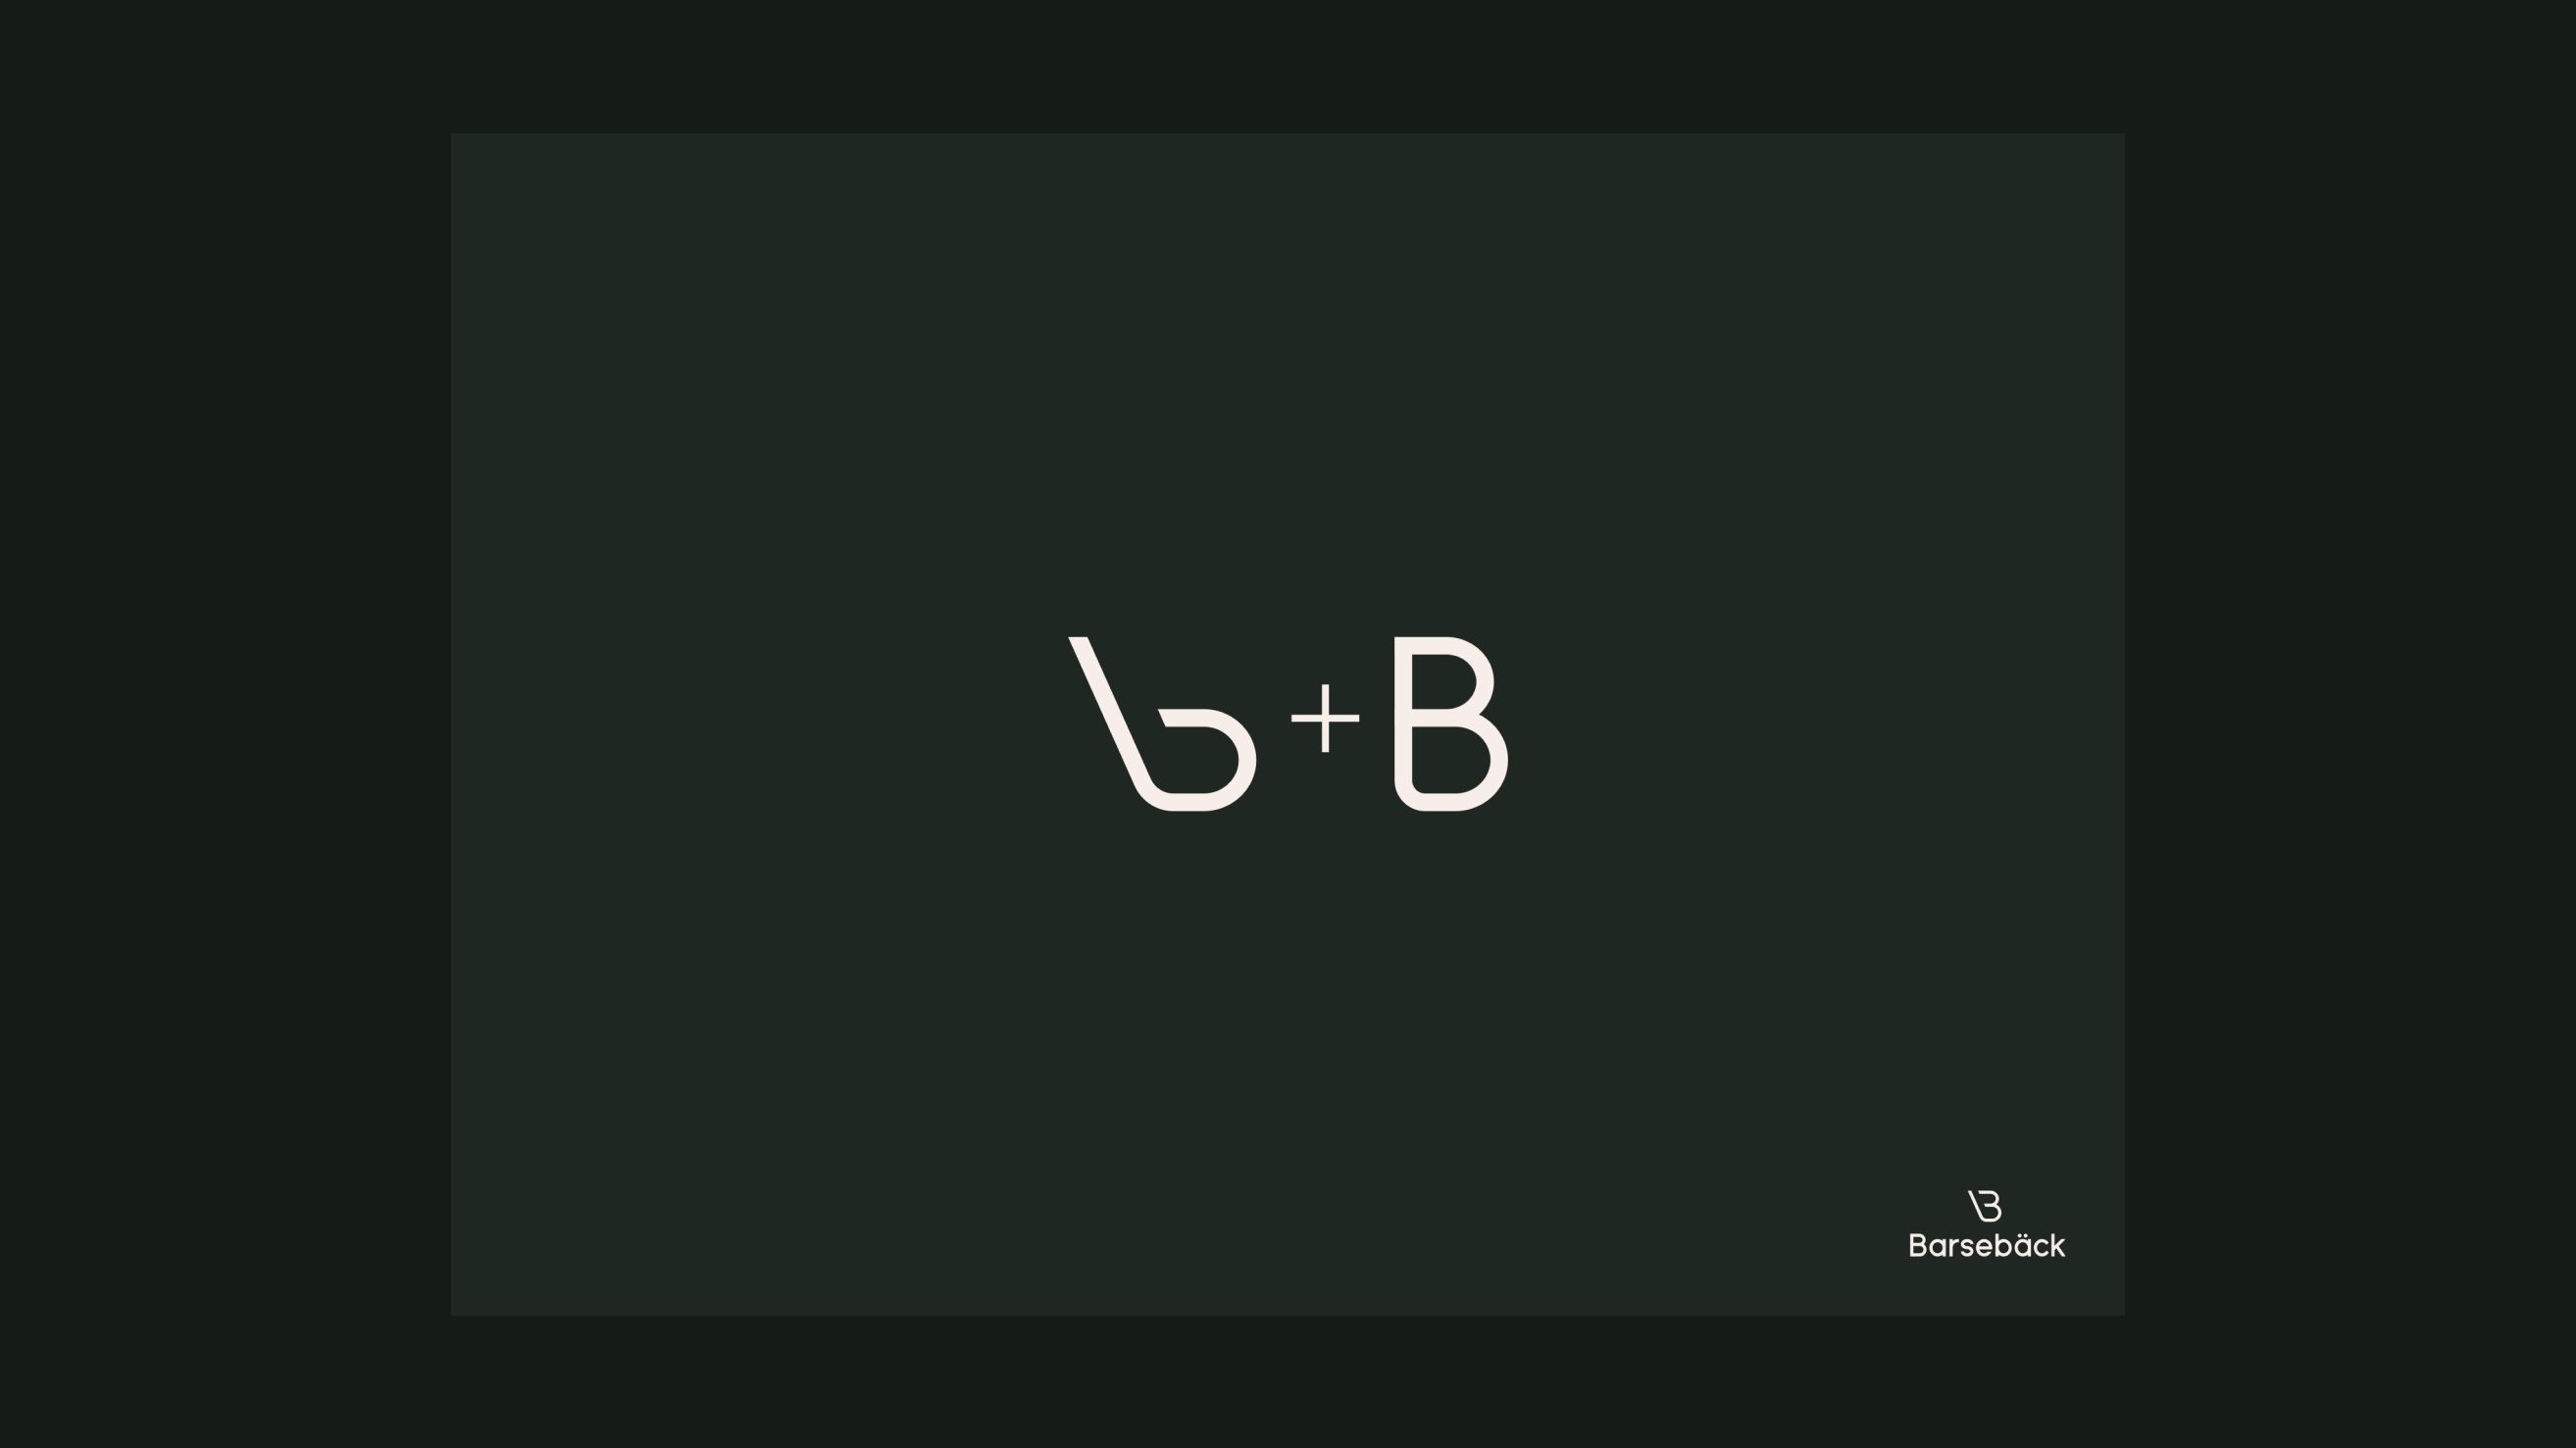 Barsebäck symbol + B.